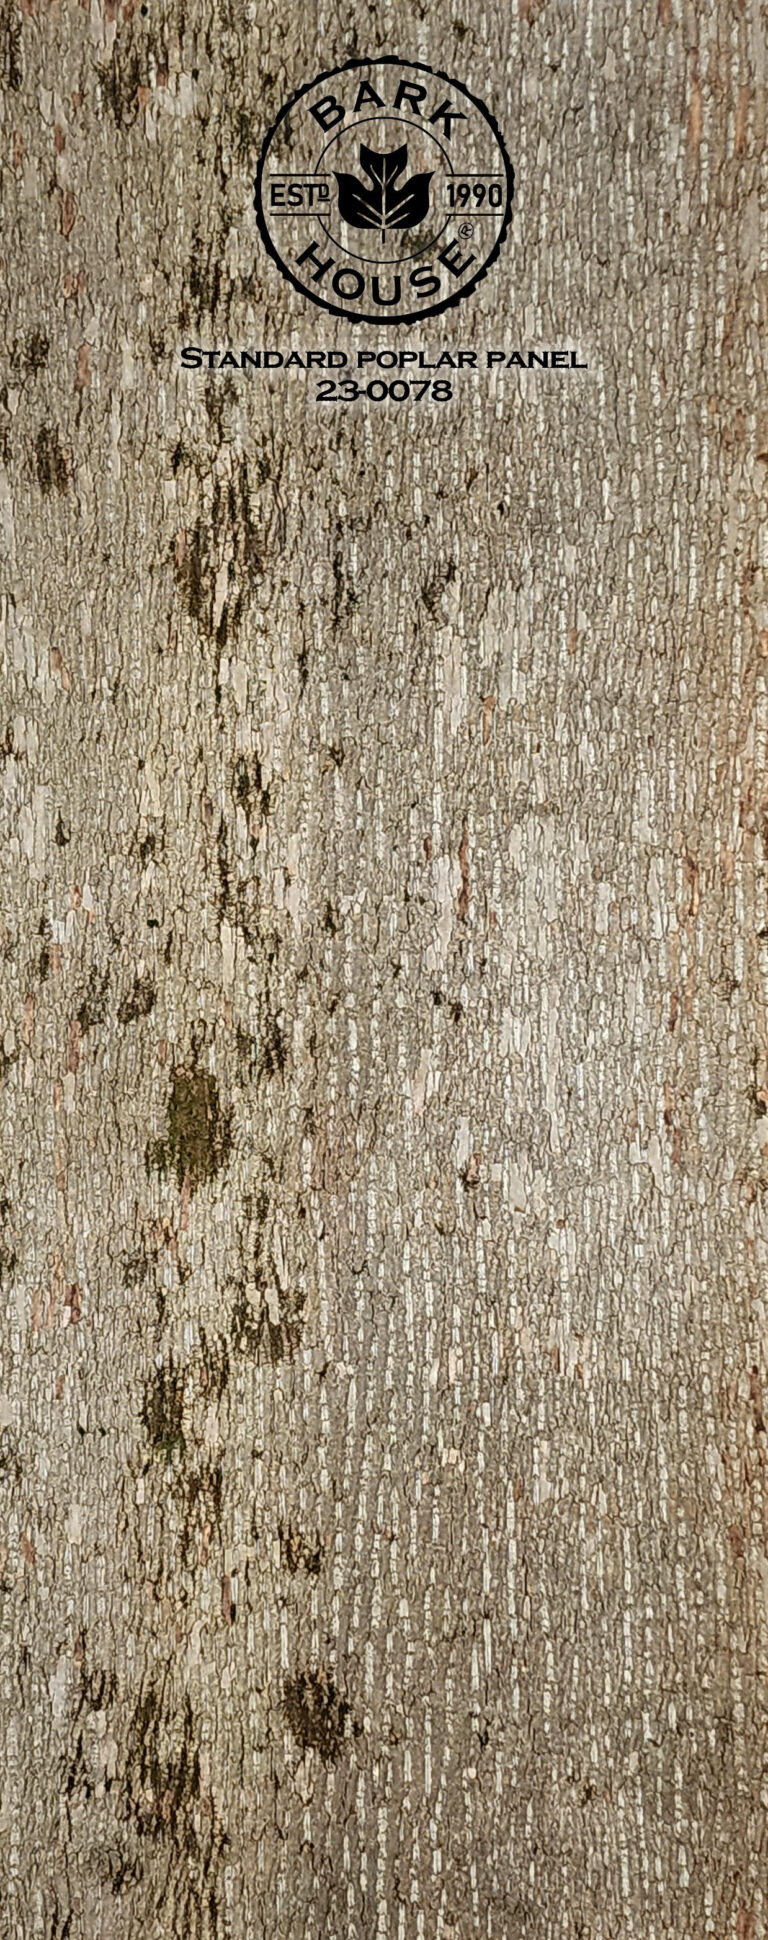 Bark House poplar bark panel SKU POPP-STD-23-0078